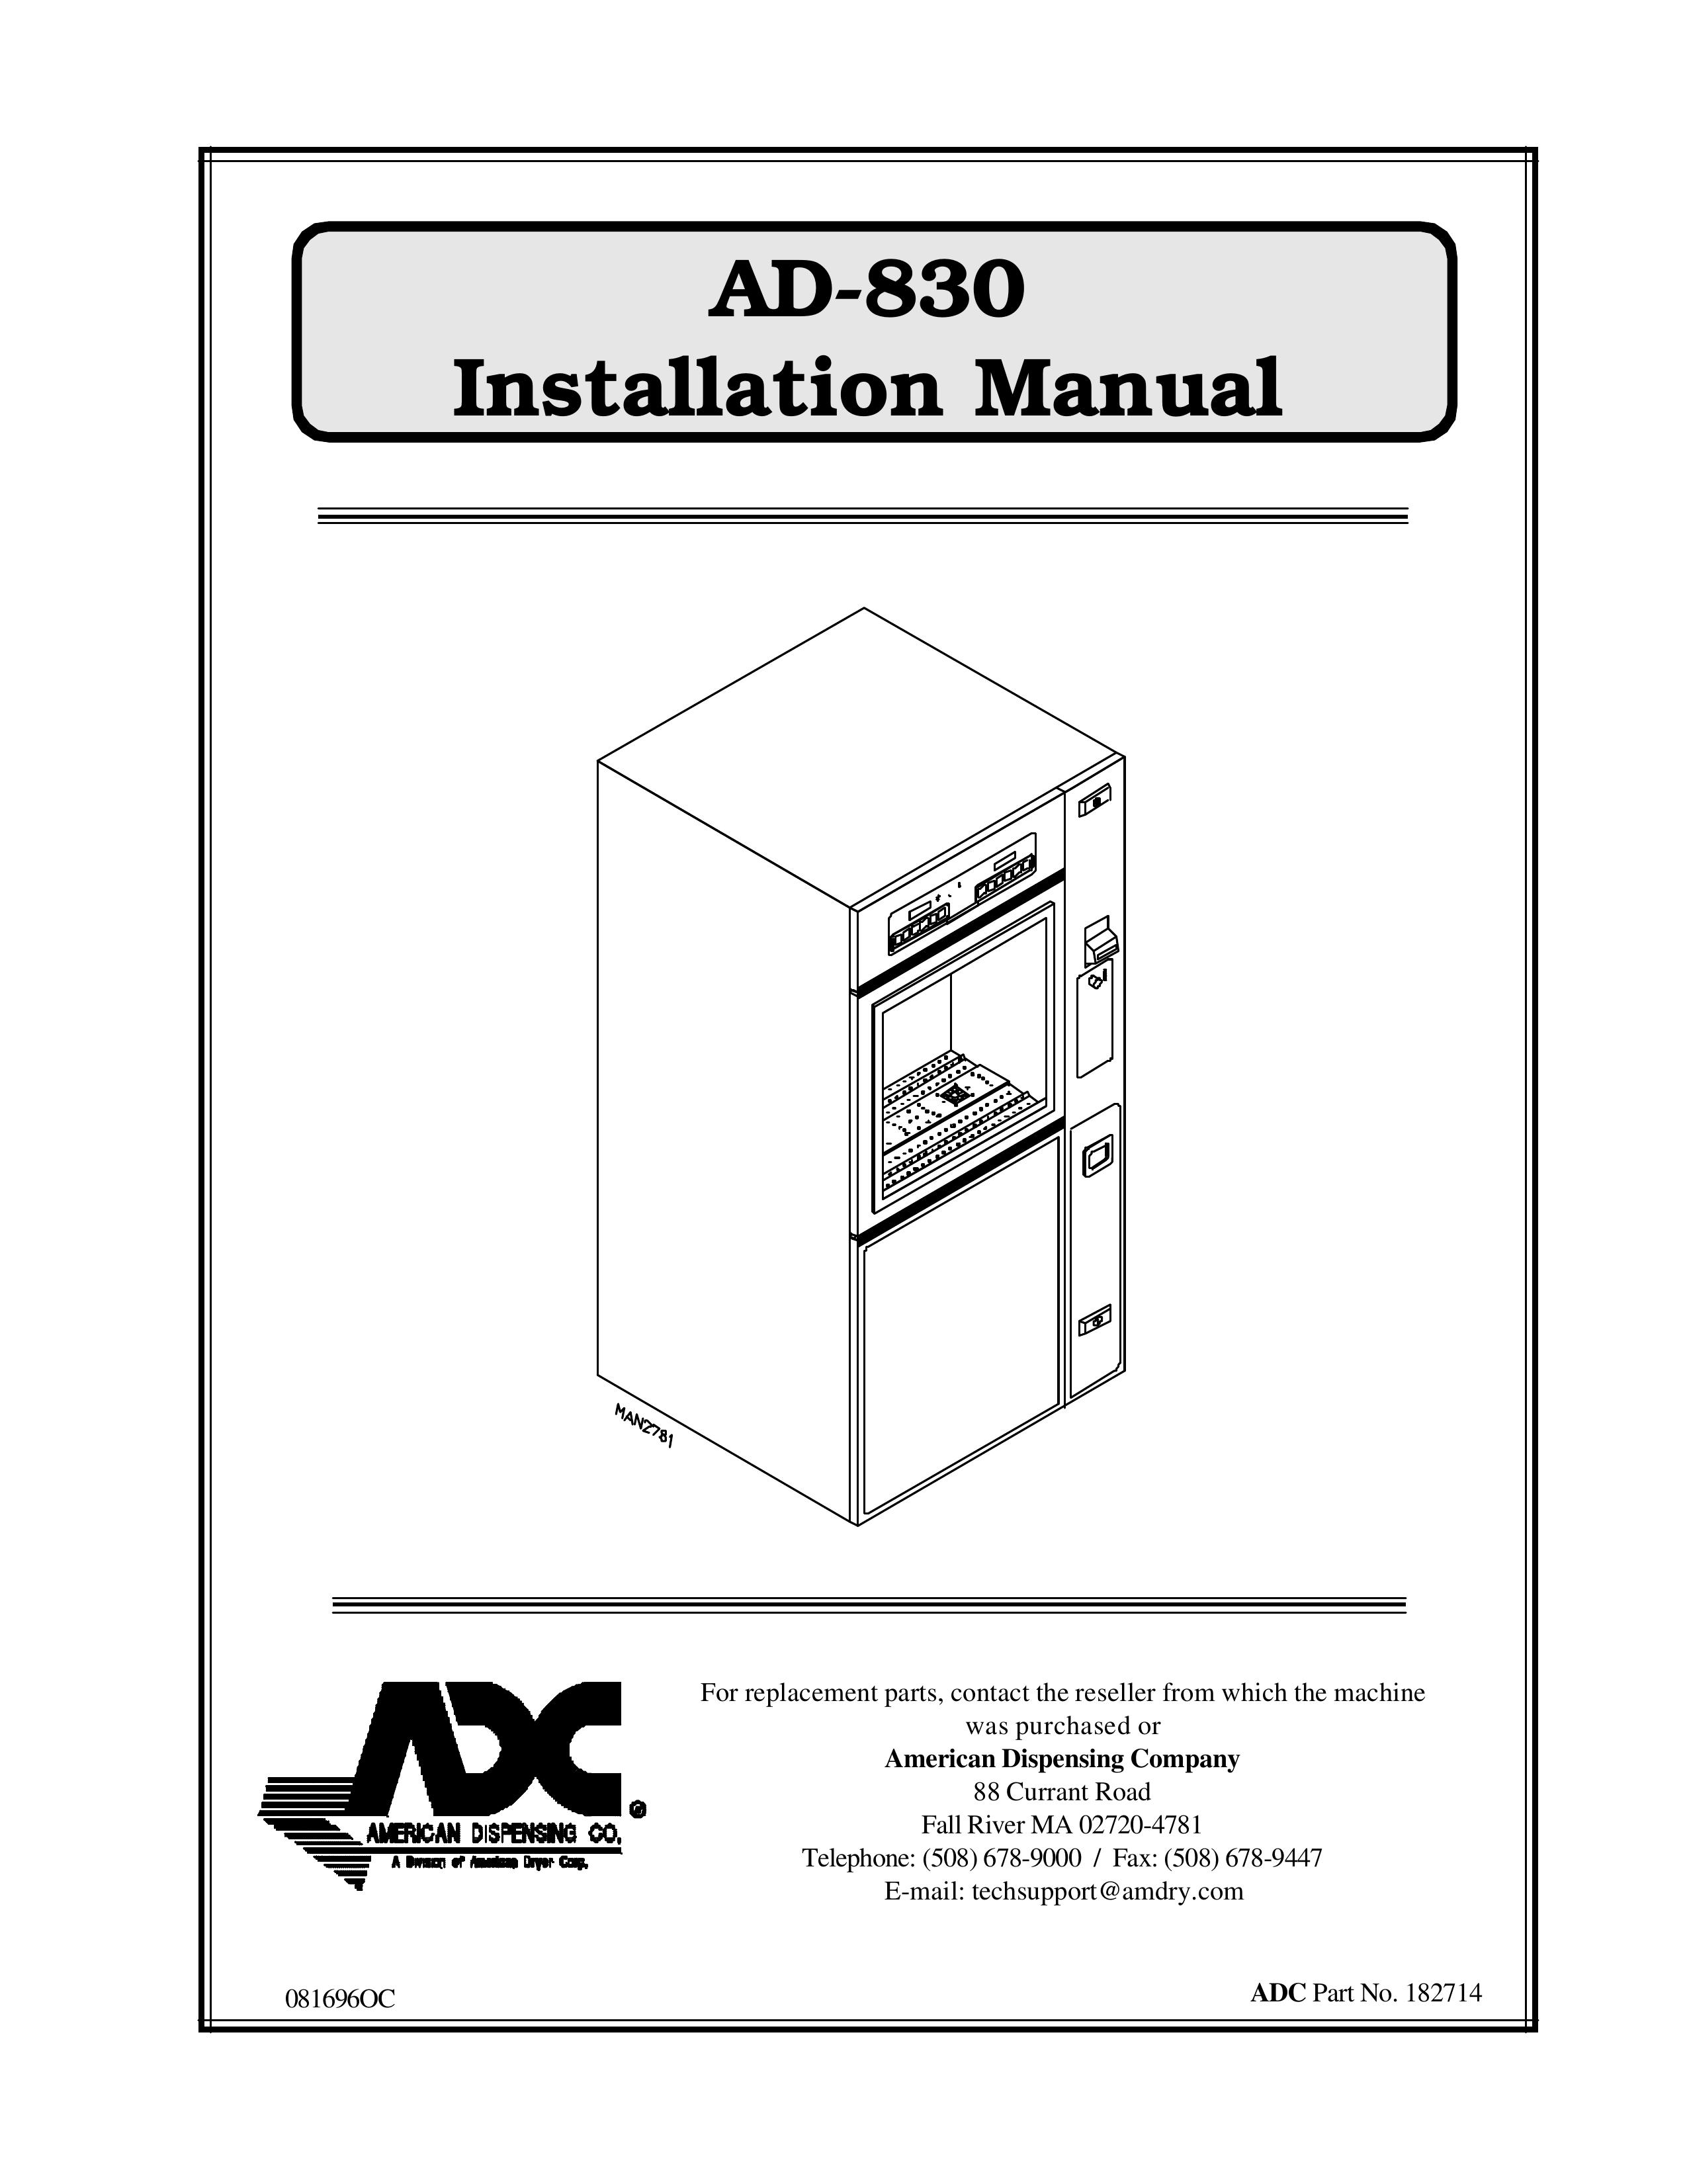 American Dryer Corp. AD-830 Water Dispenser User Manual